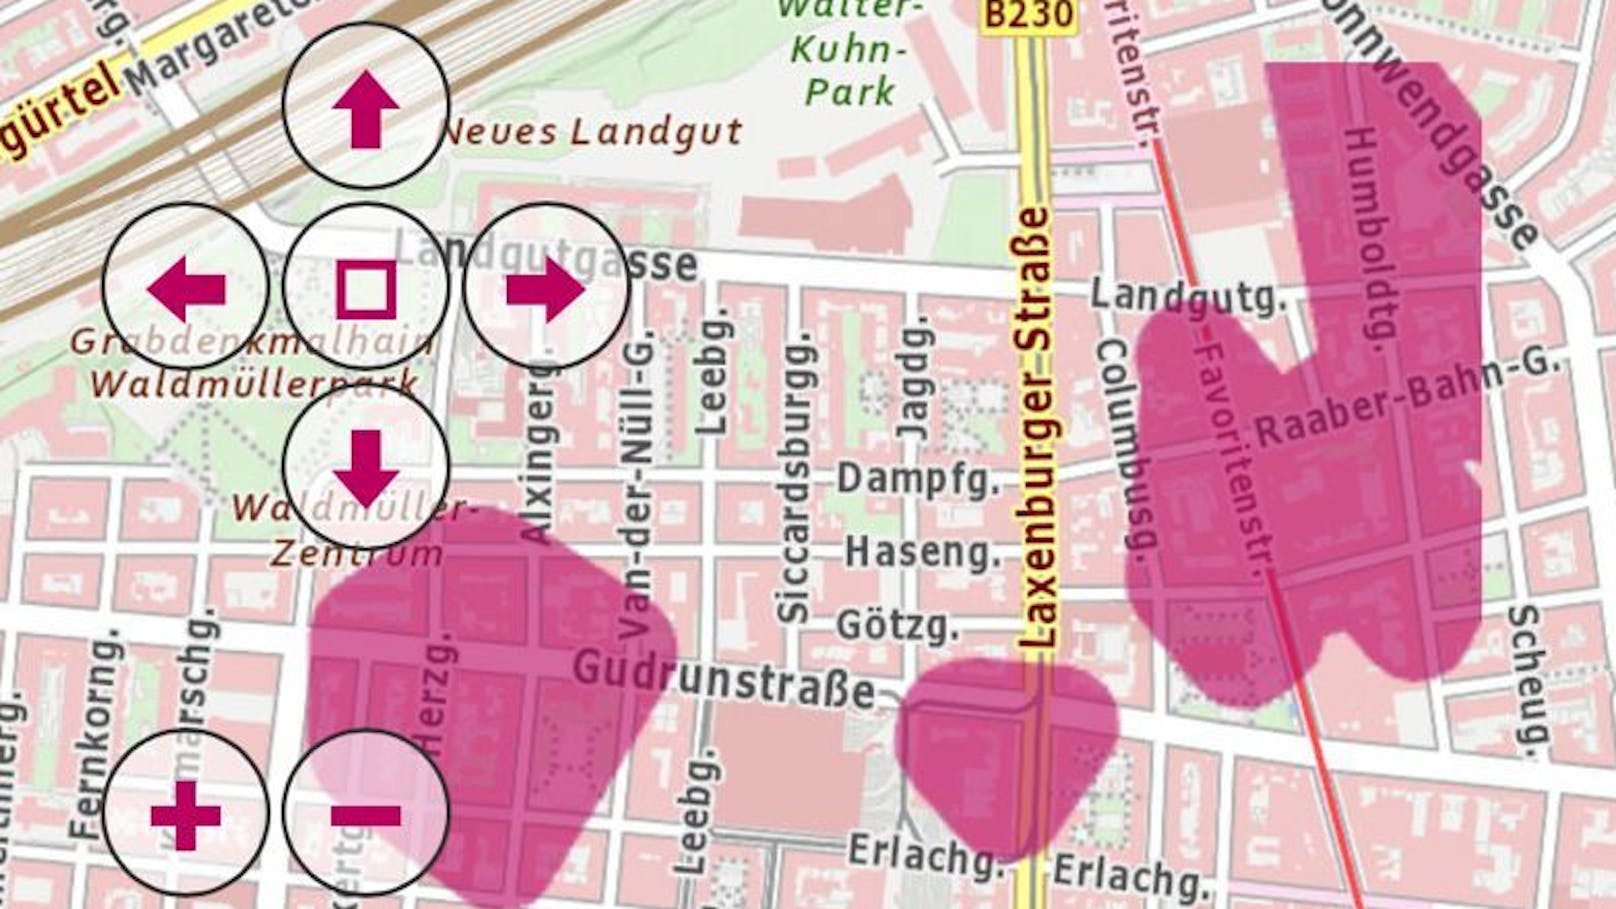 Defektes Kabel sorgt für Stromausfall in Wien-Favoriten